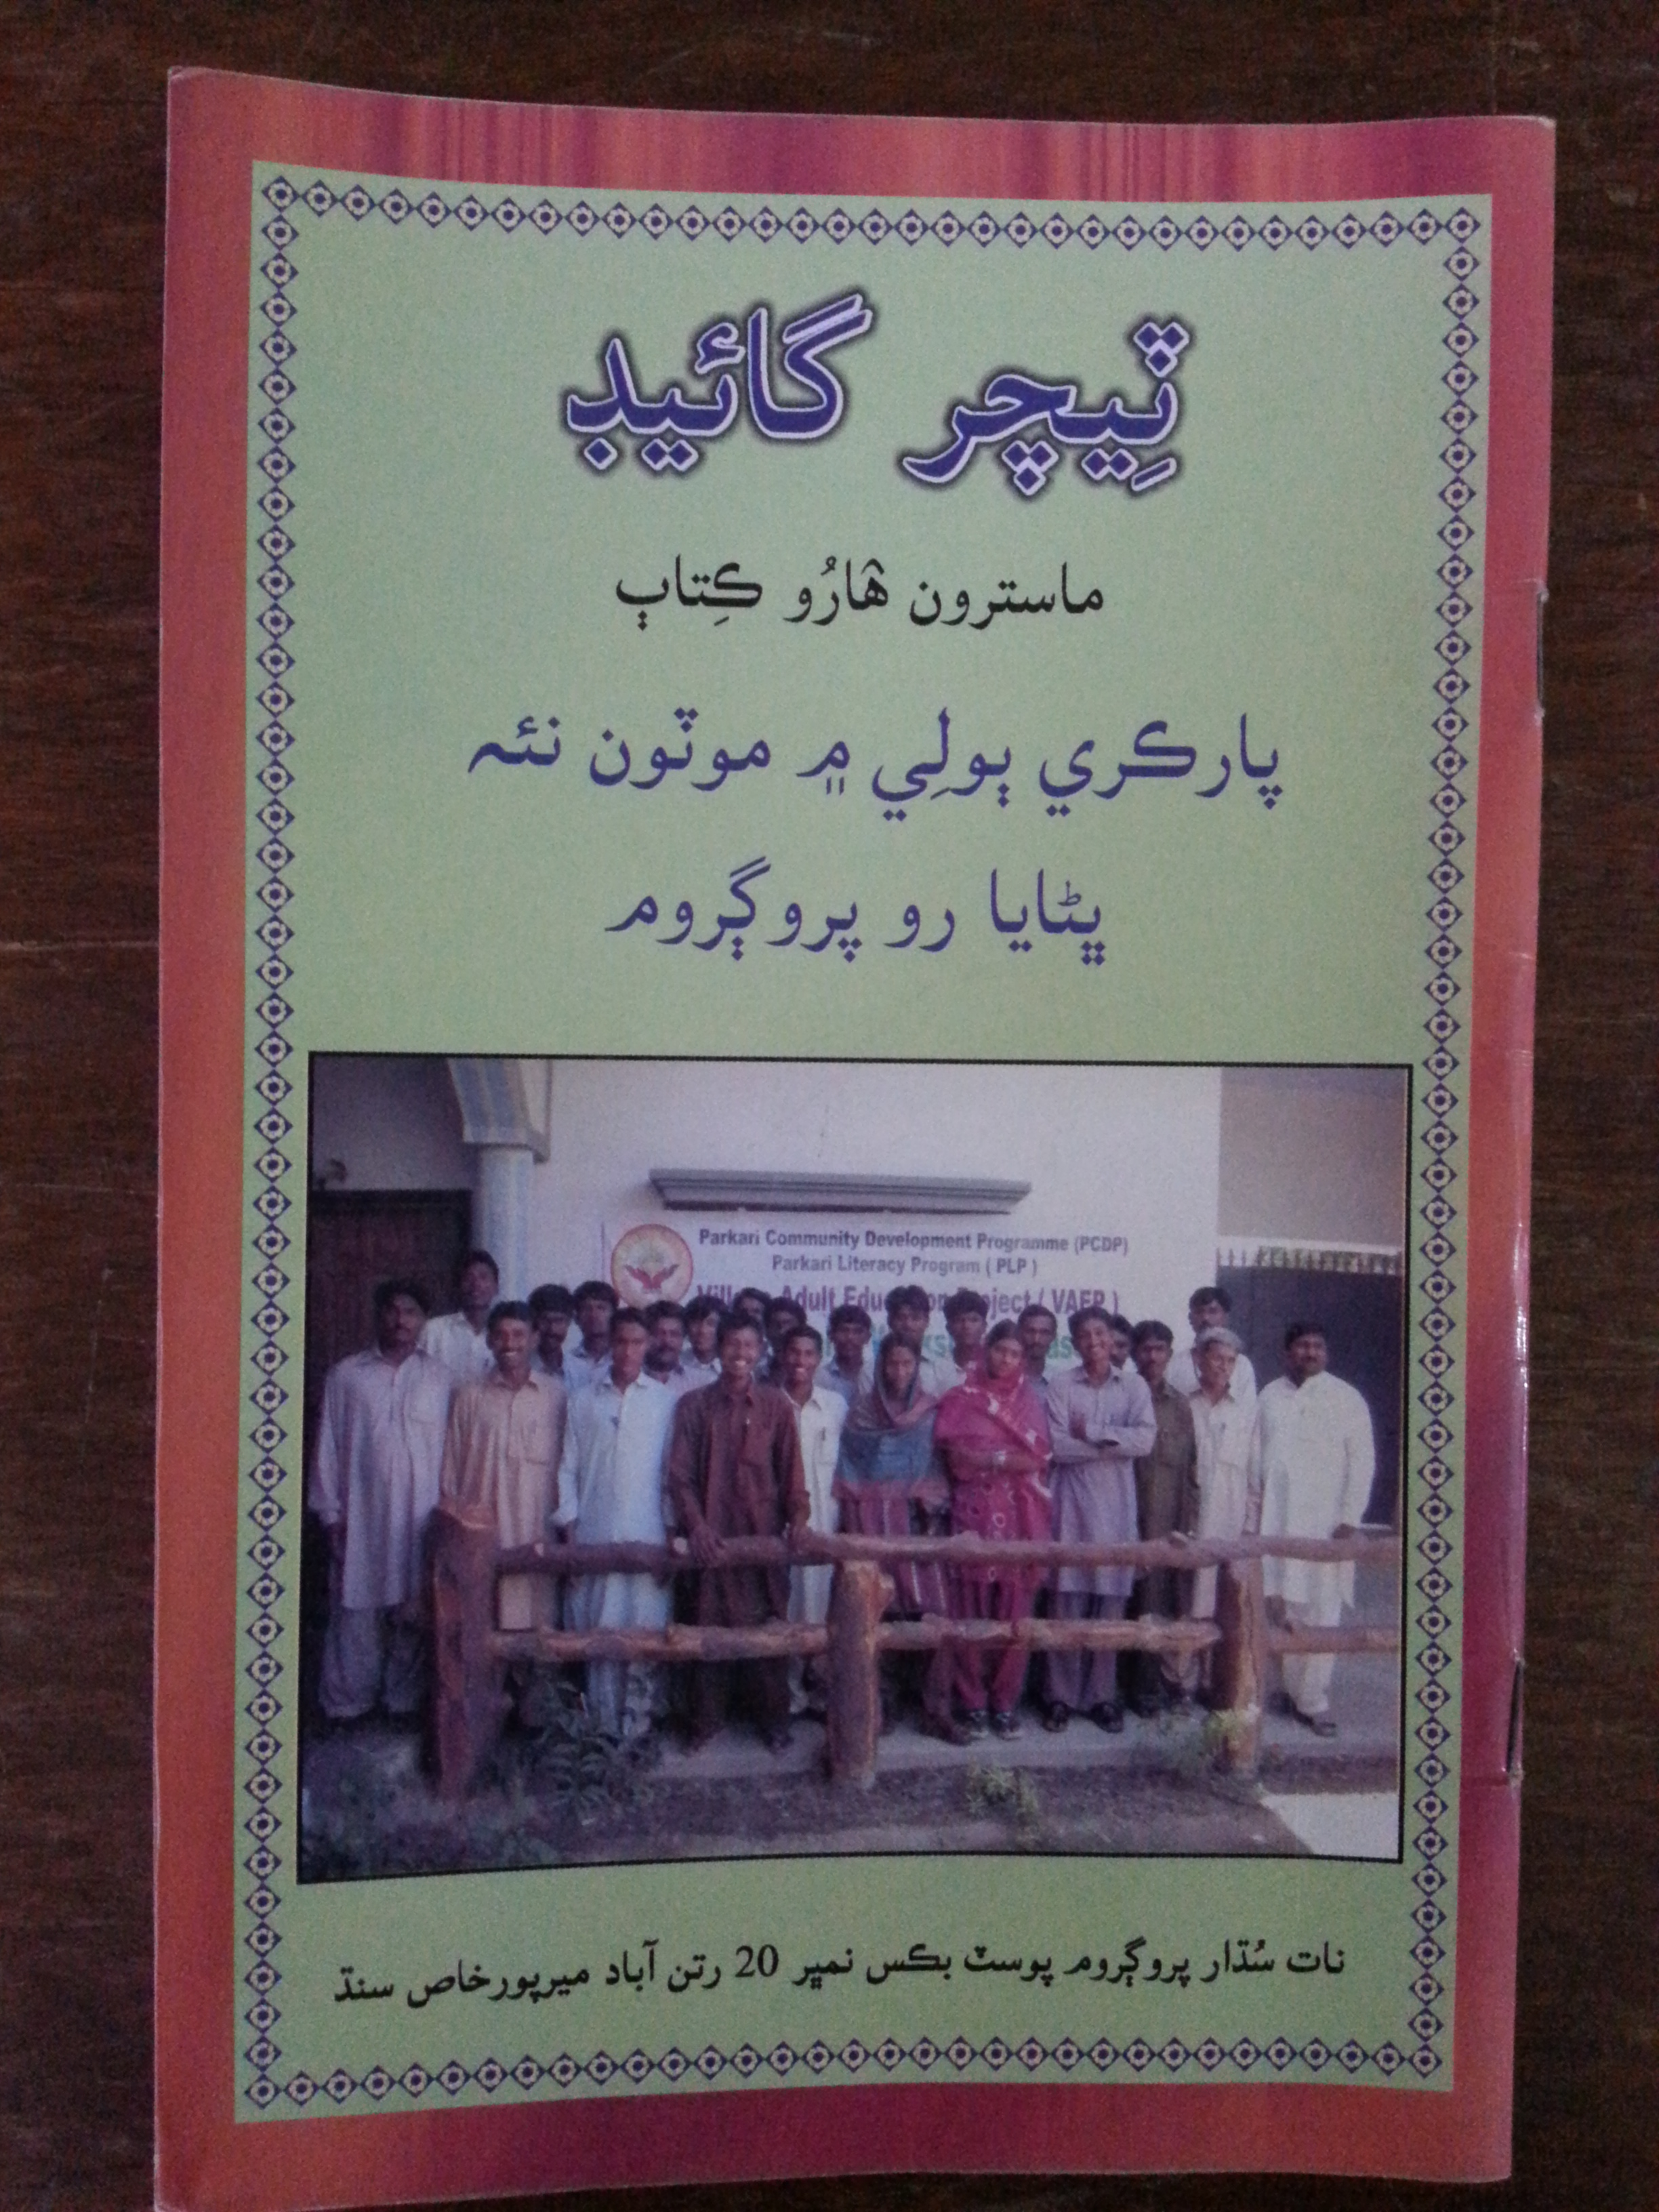 One of the teachers' books